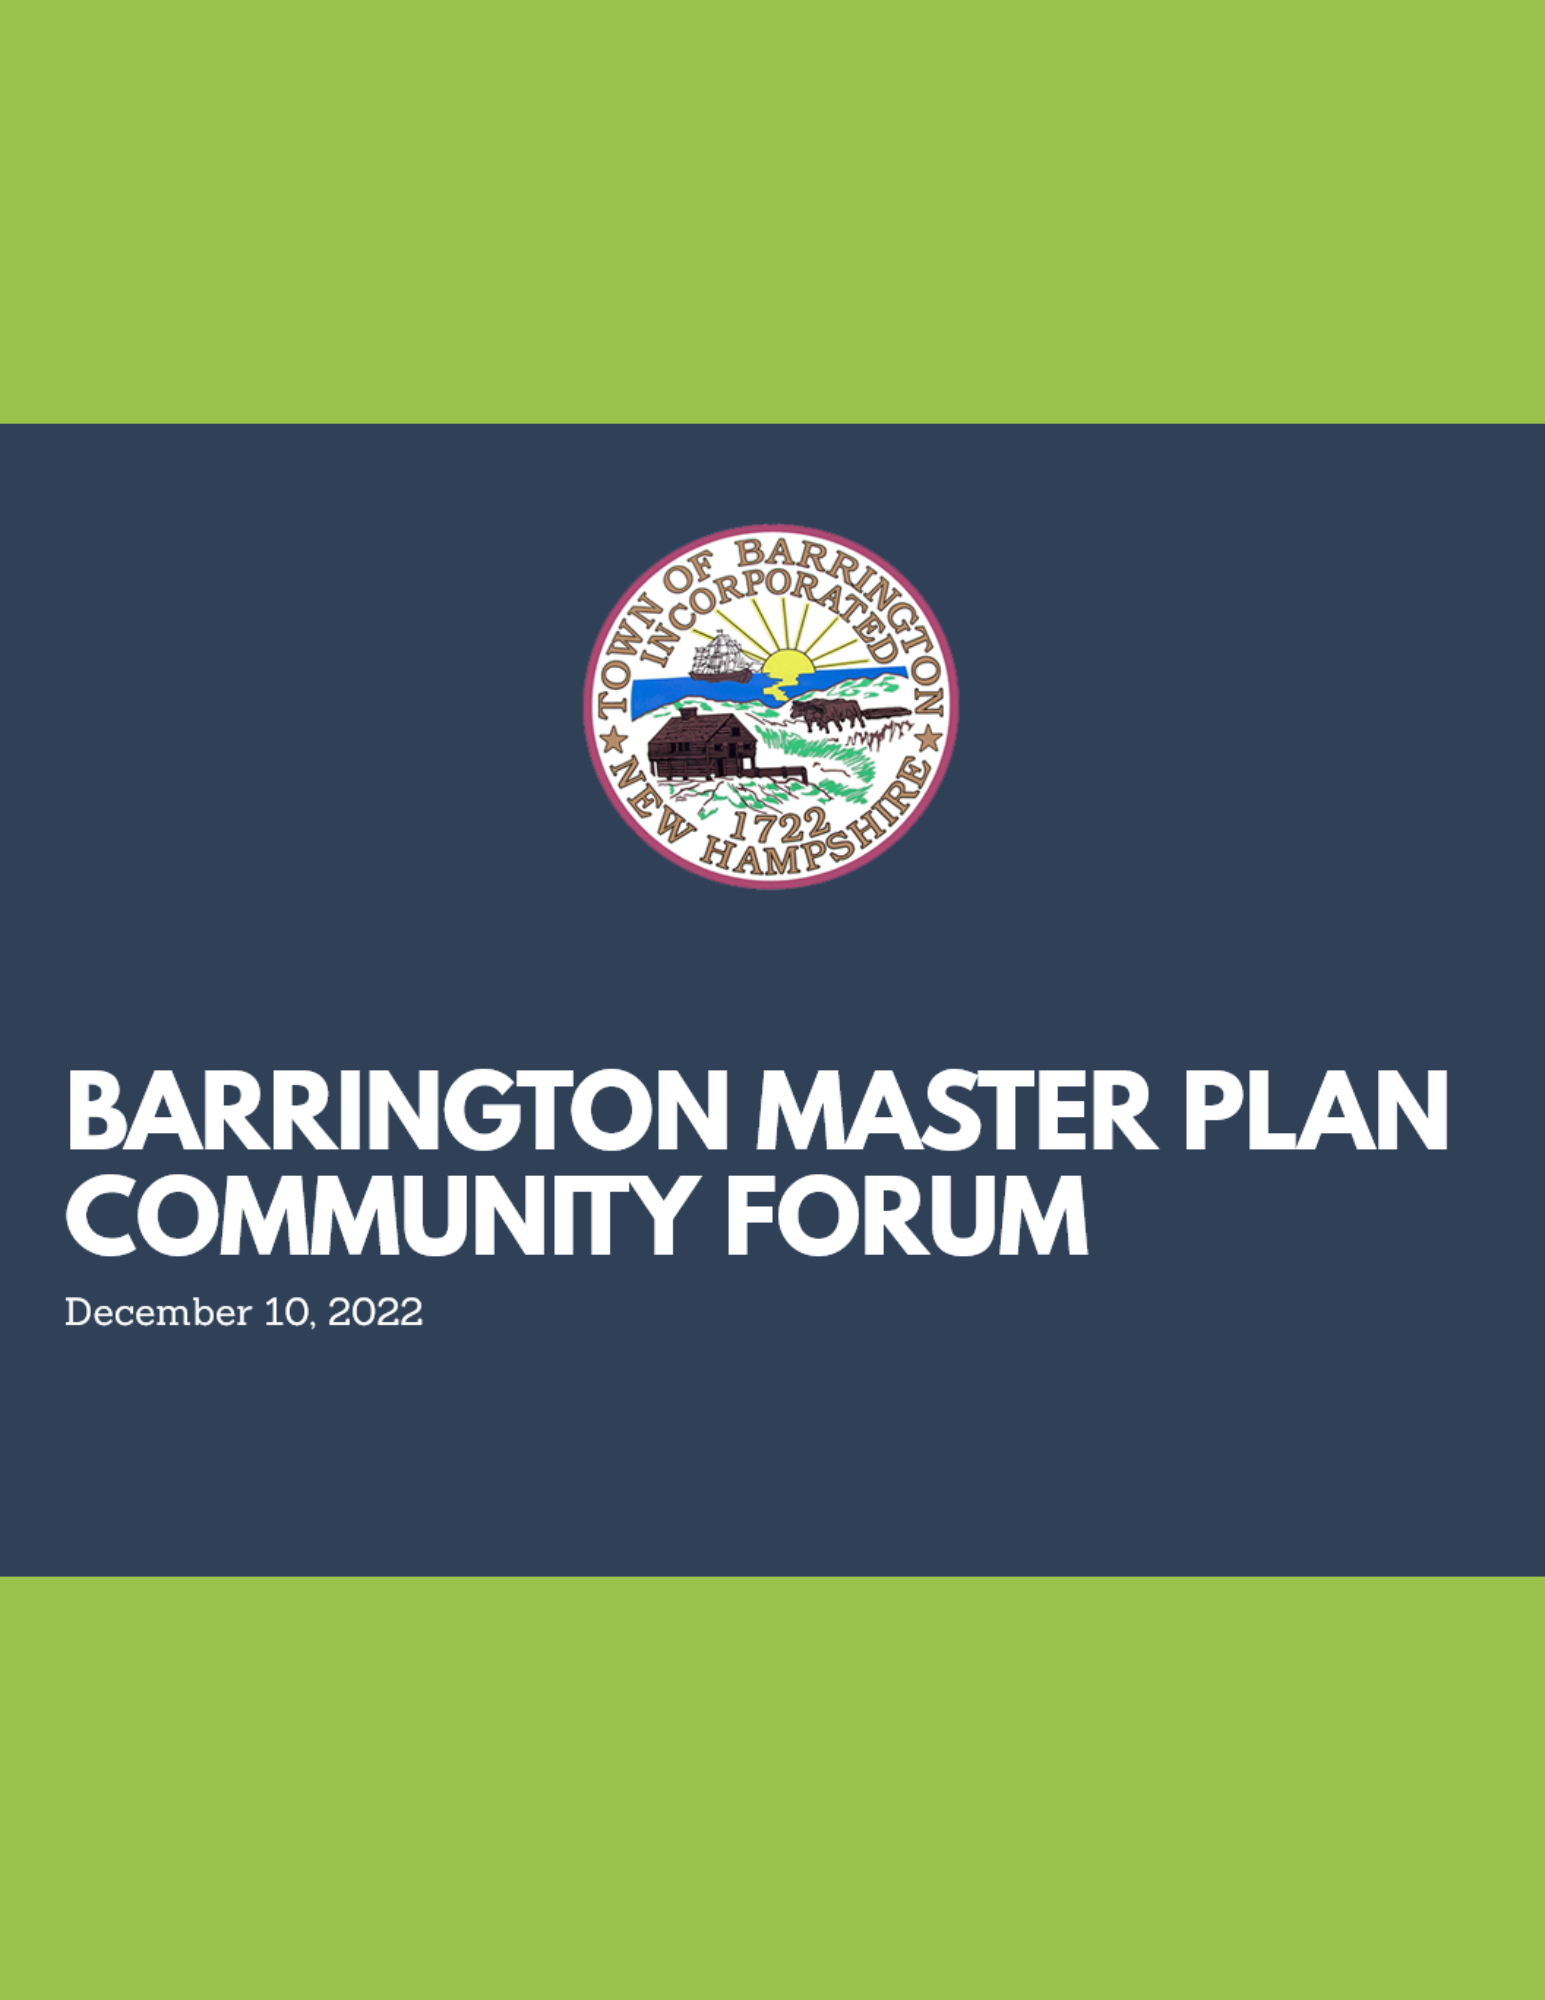 Cover slide from the Barrington Master Plan Community Forum